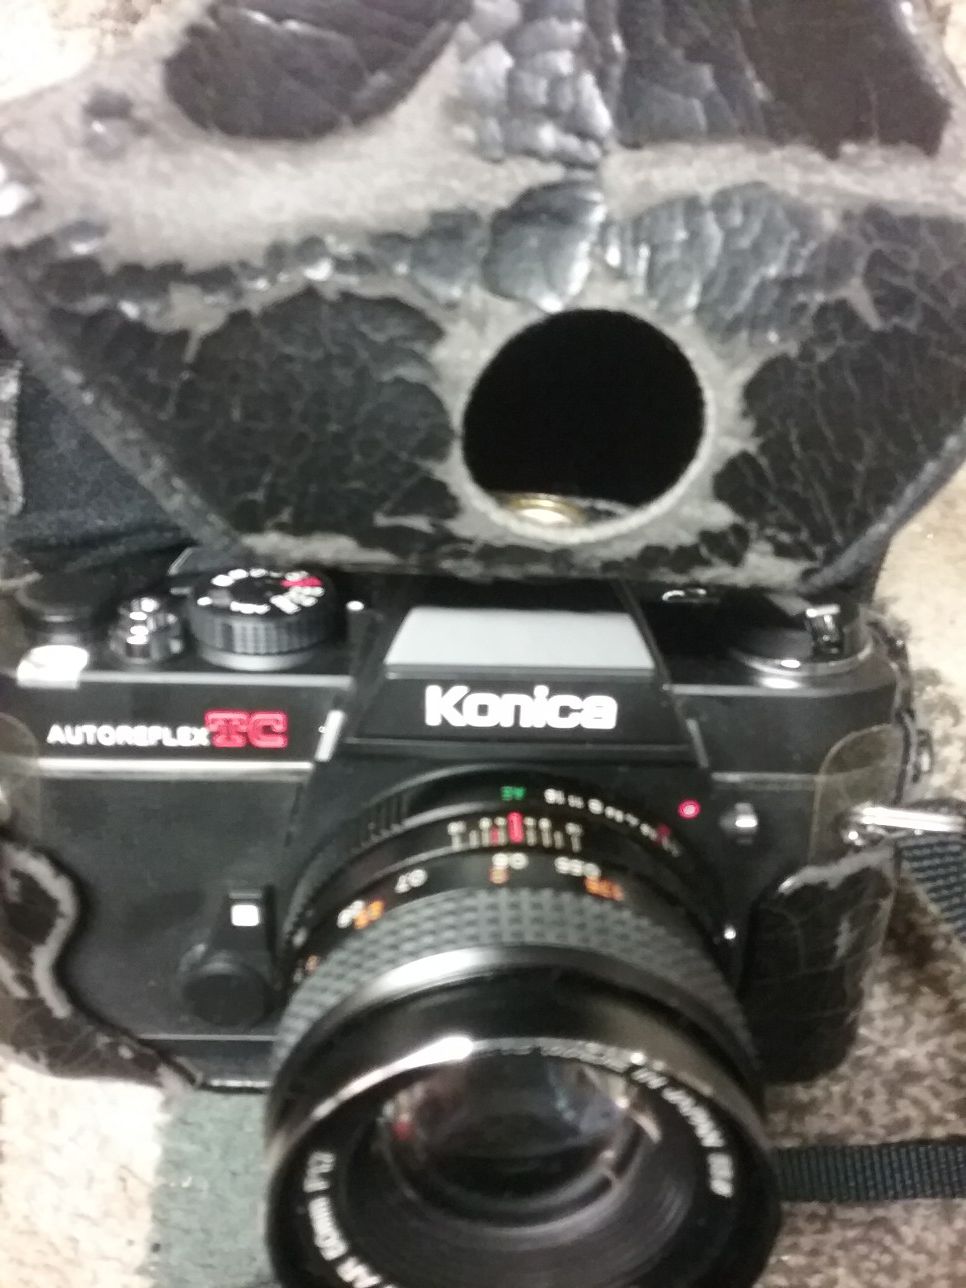 Vintage Konica 35-mm film camera.